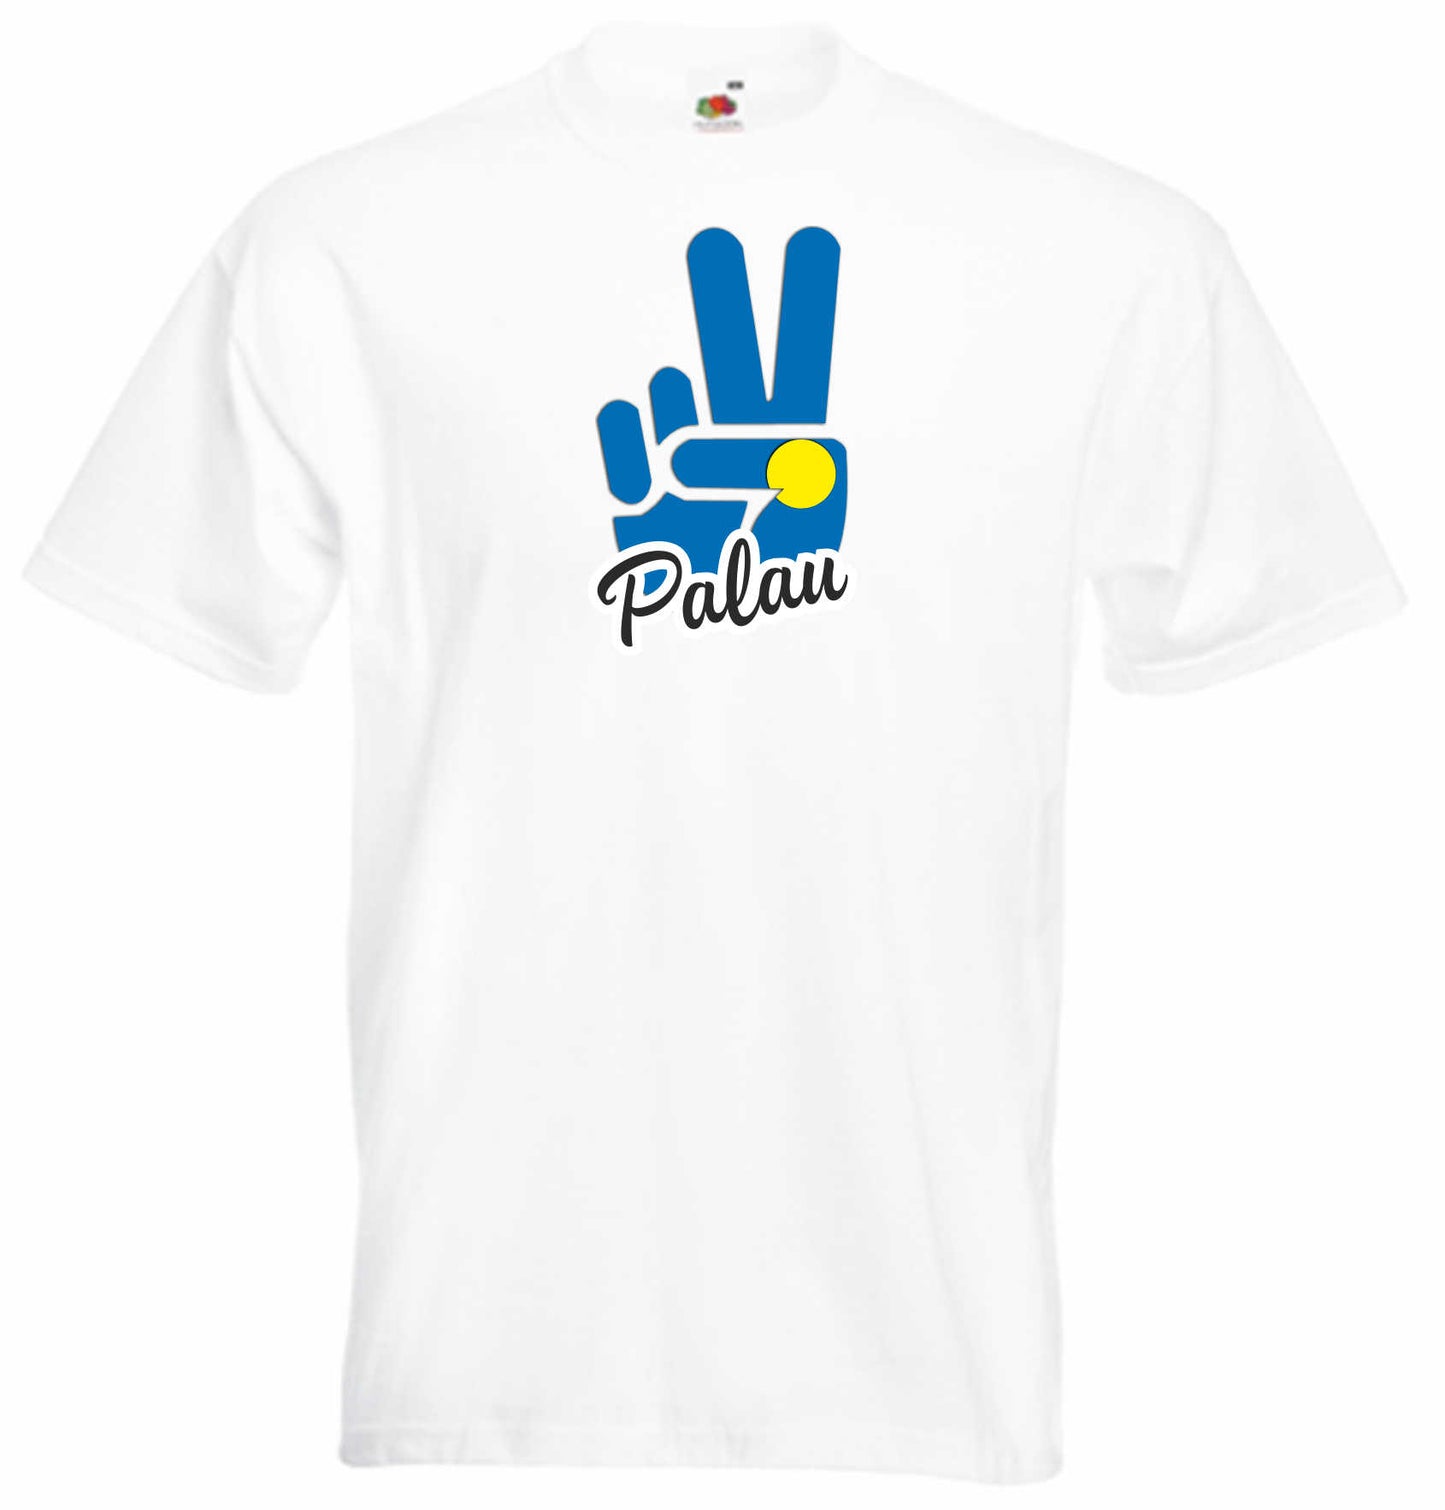 T-Shirt Herren - Victory - Flagge / Fahne - Palau - Sieg